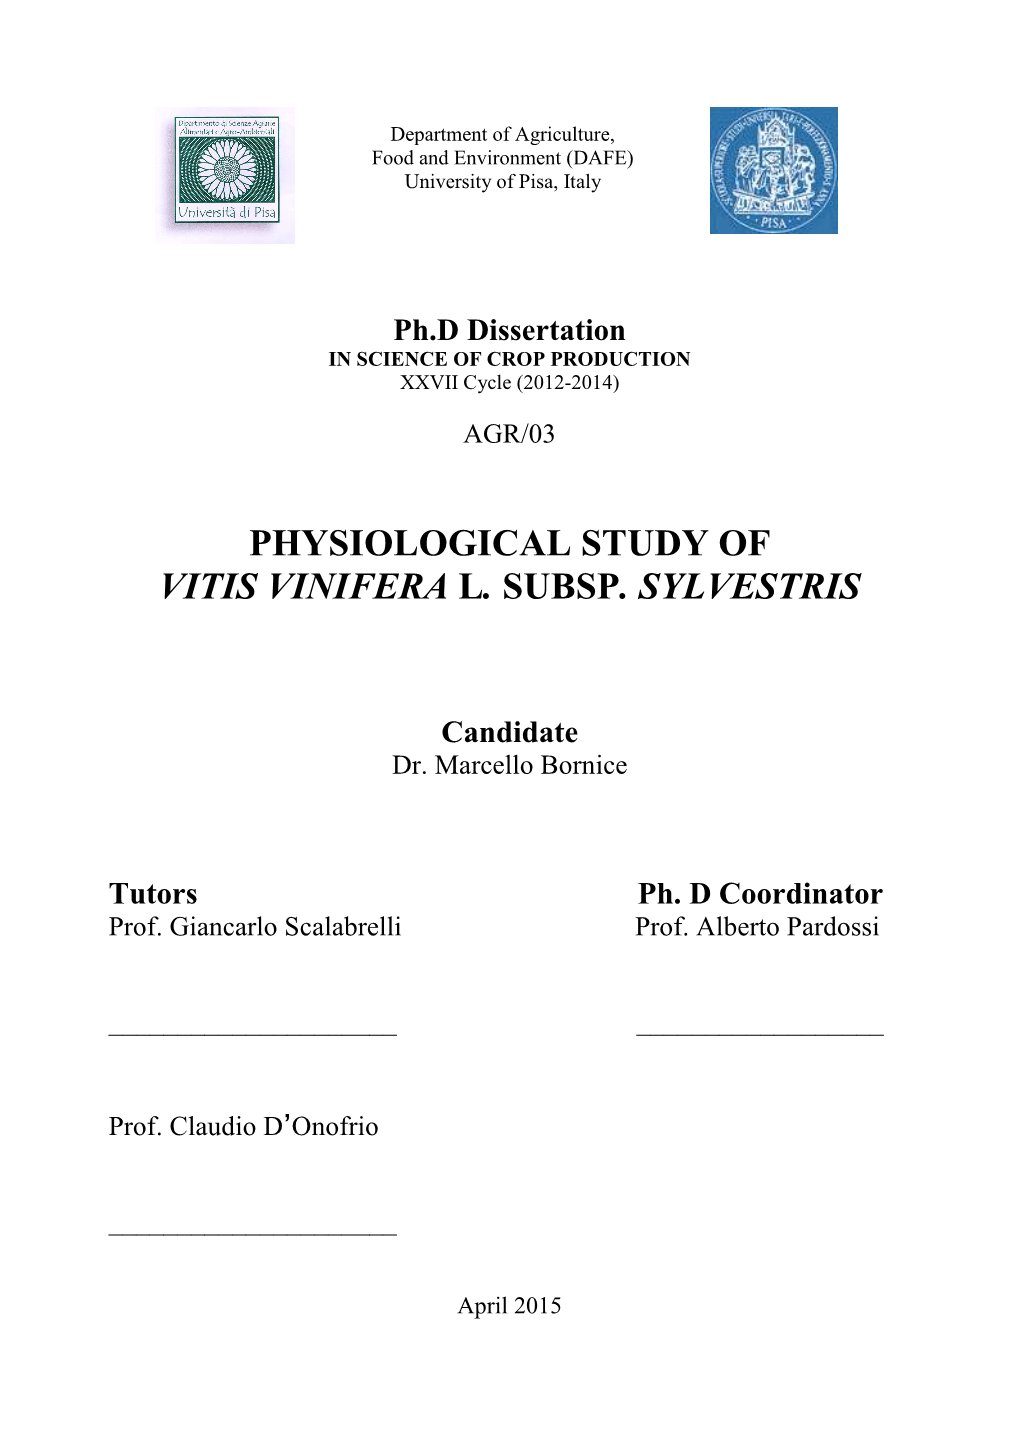 Physiological Study of Vitis Vinifera L. Subsp. Sylvestris